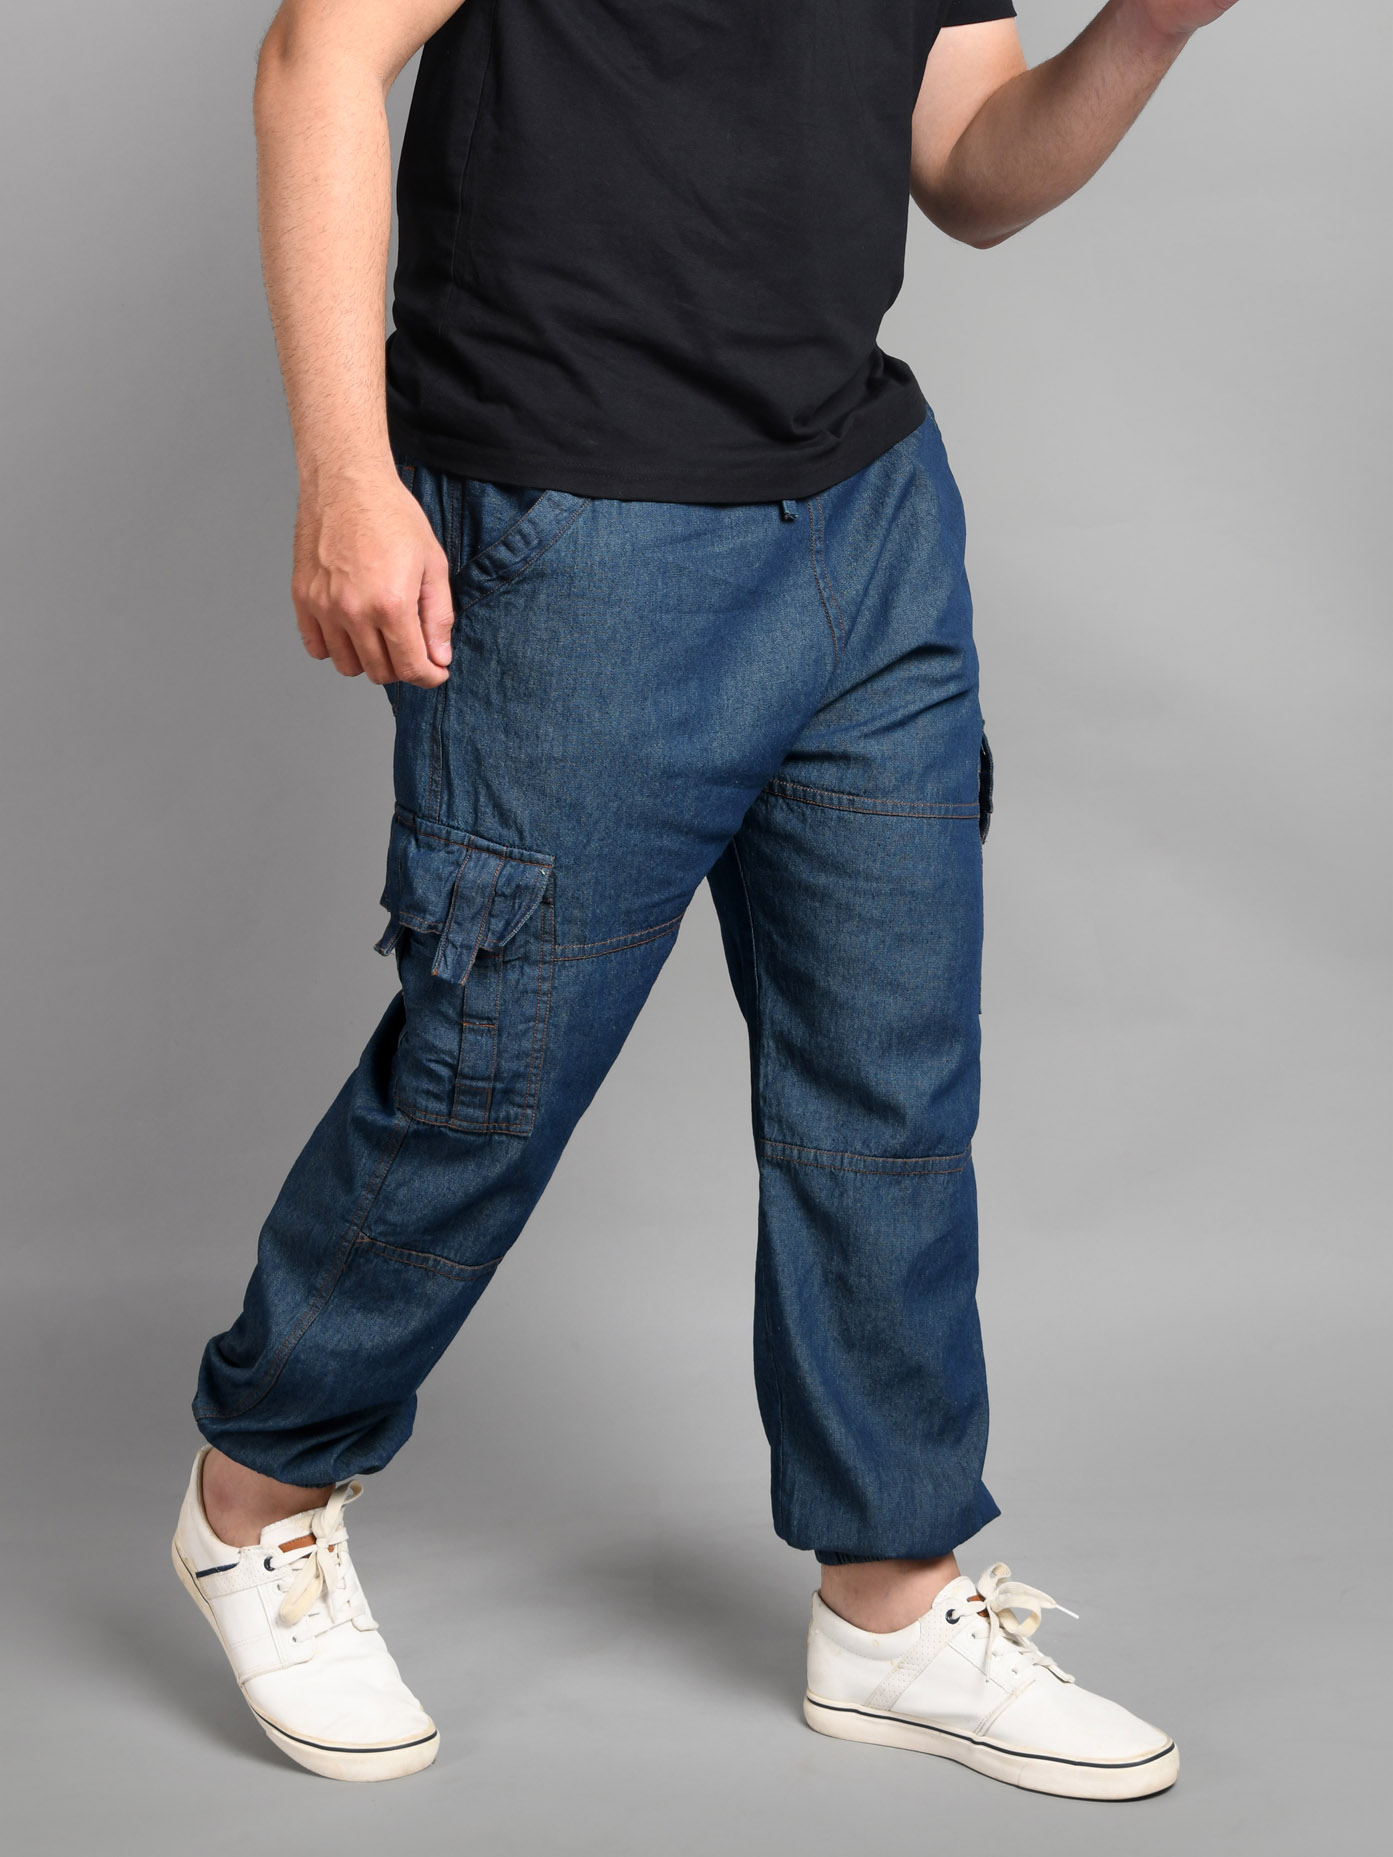 Peppyzone Mens 6 Pocket Jogger for Men Beige M  Amazonin Clothing   Accessories